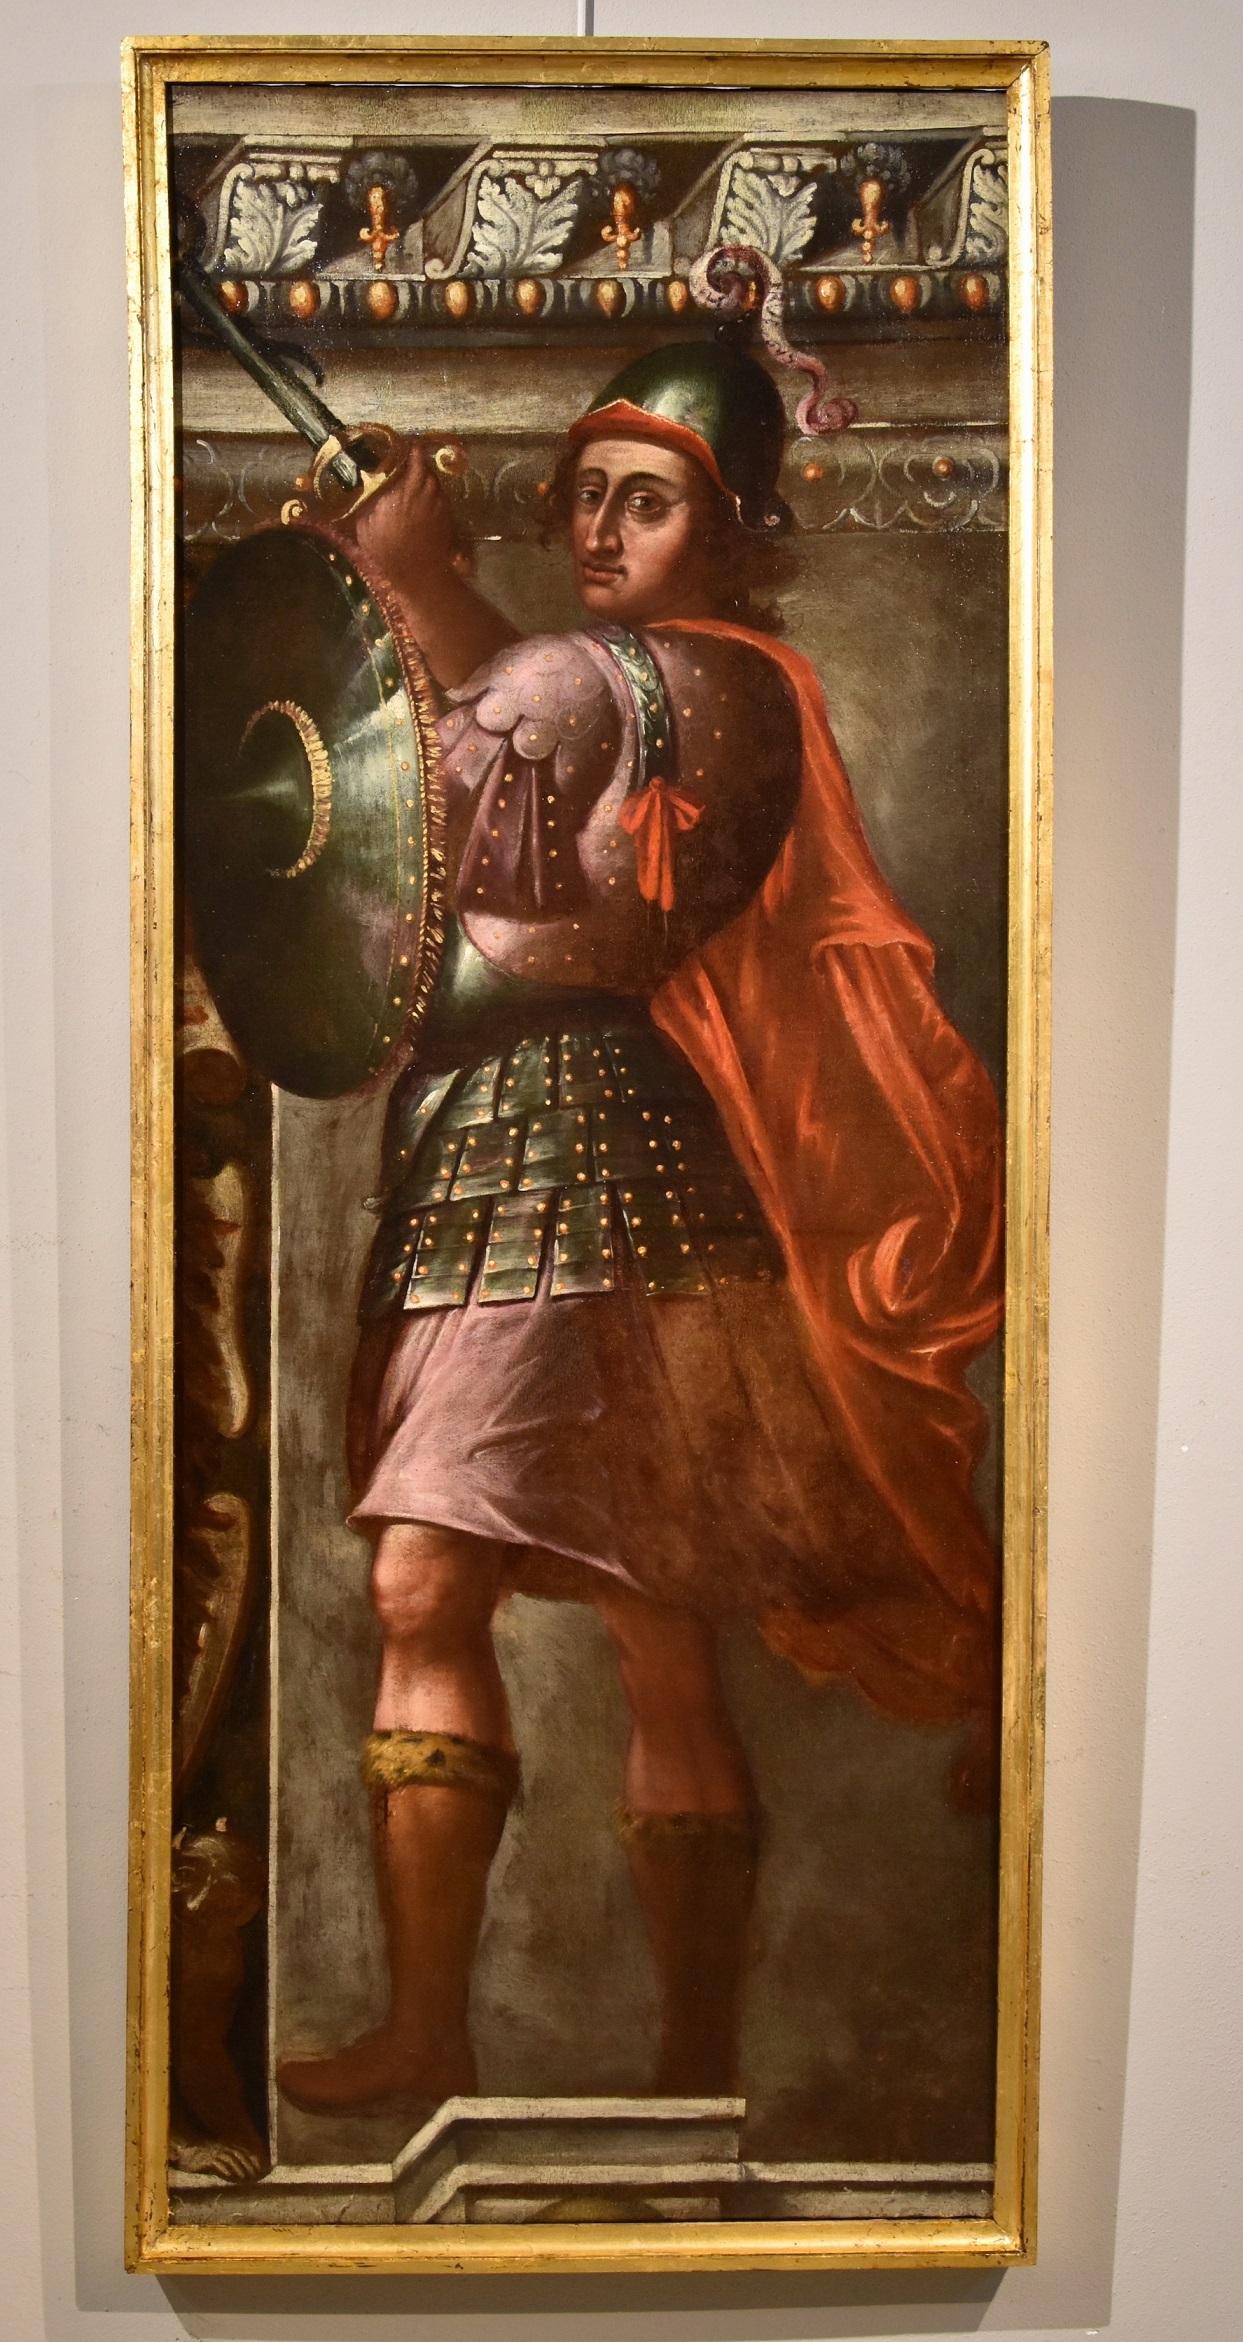 Giacomo Stella (Brescia 1545 - Rome 1630) Portrait Painting – Allegory Man Fortress Stella Gemälde Öl auf Leinwand Alter Meister 16./17. Jahrhundert Kunst